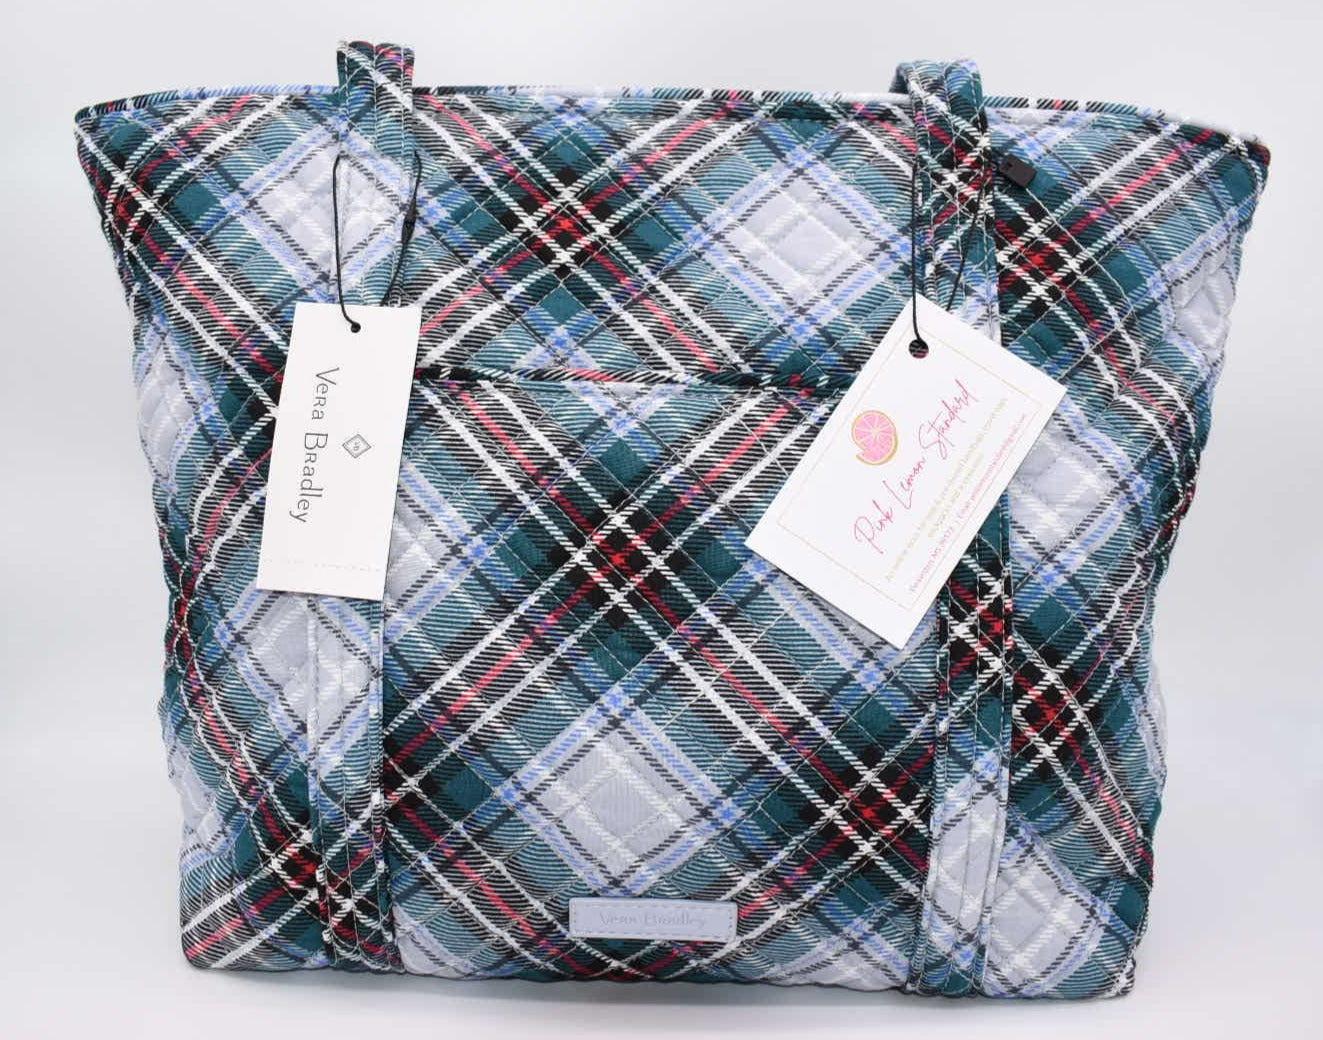 Vera Bradley Small Vera Tote Bag in "Snowy Plaid" Pattern